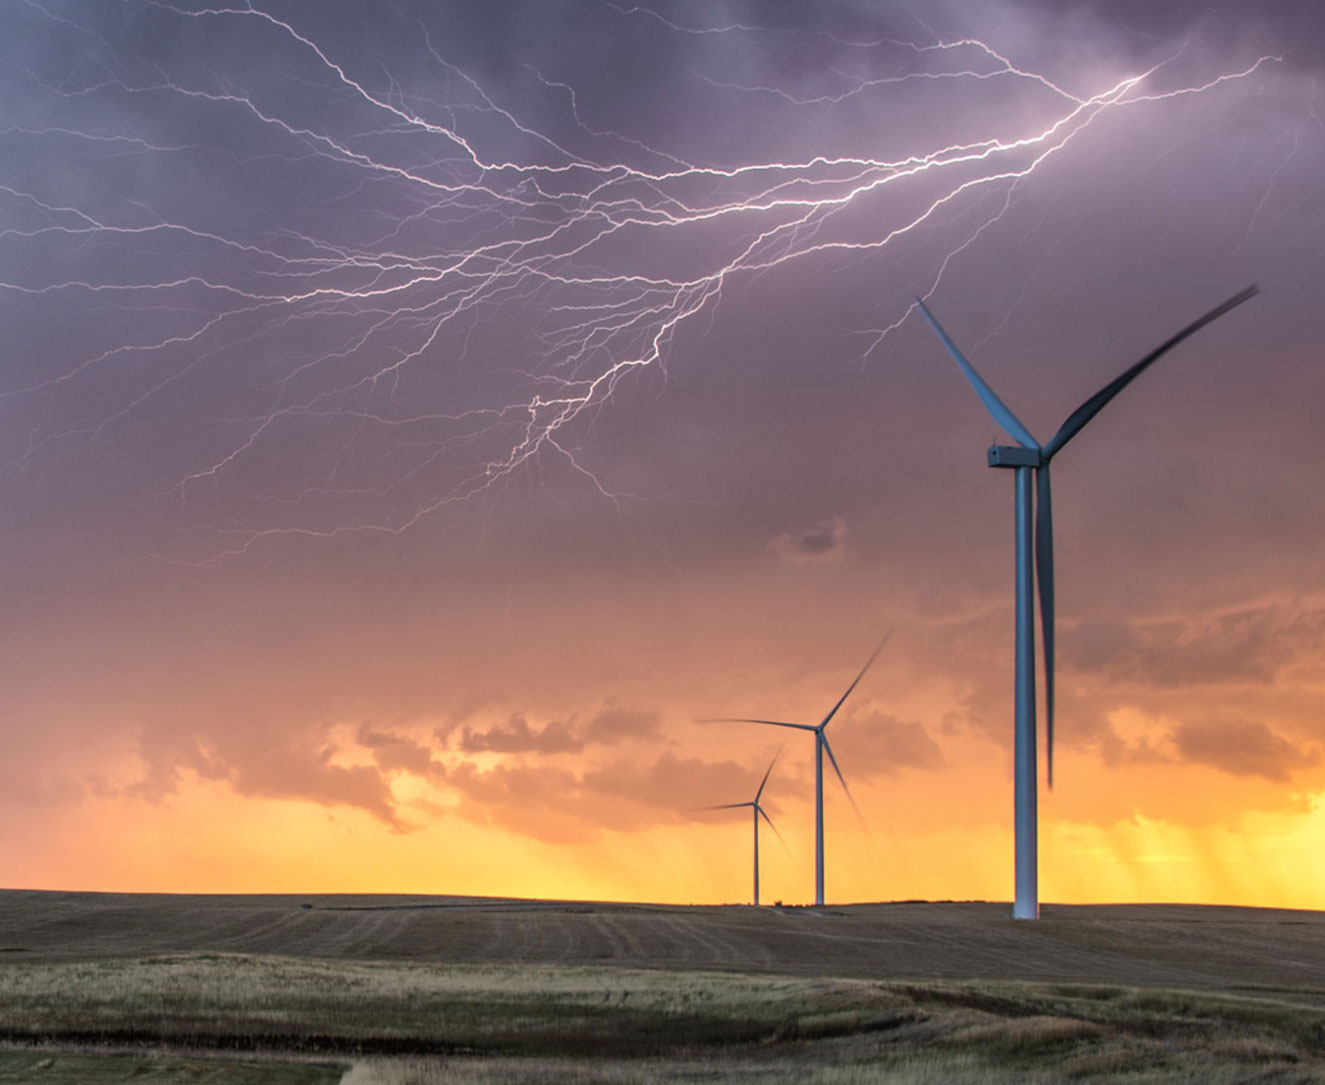 lightning wind farm strikes